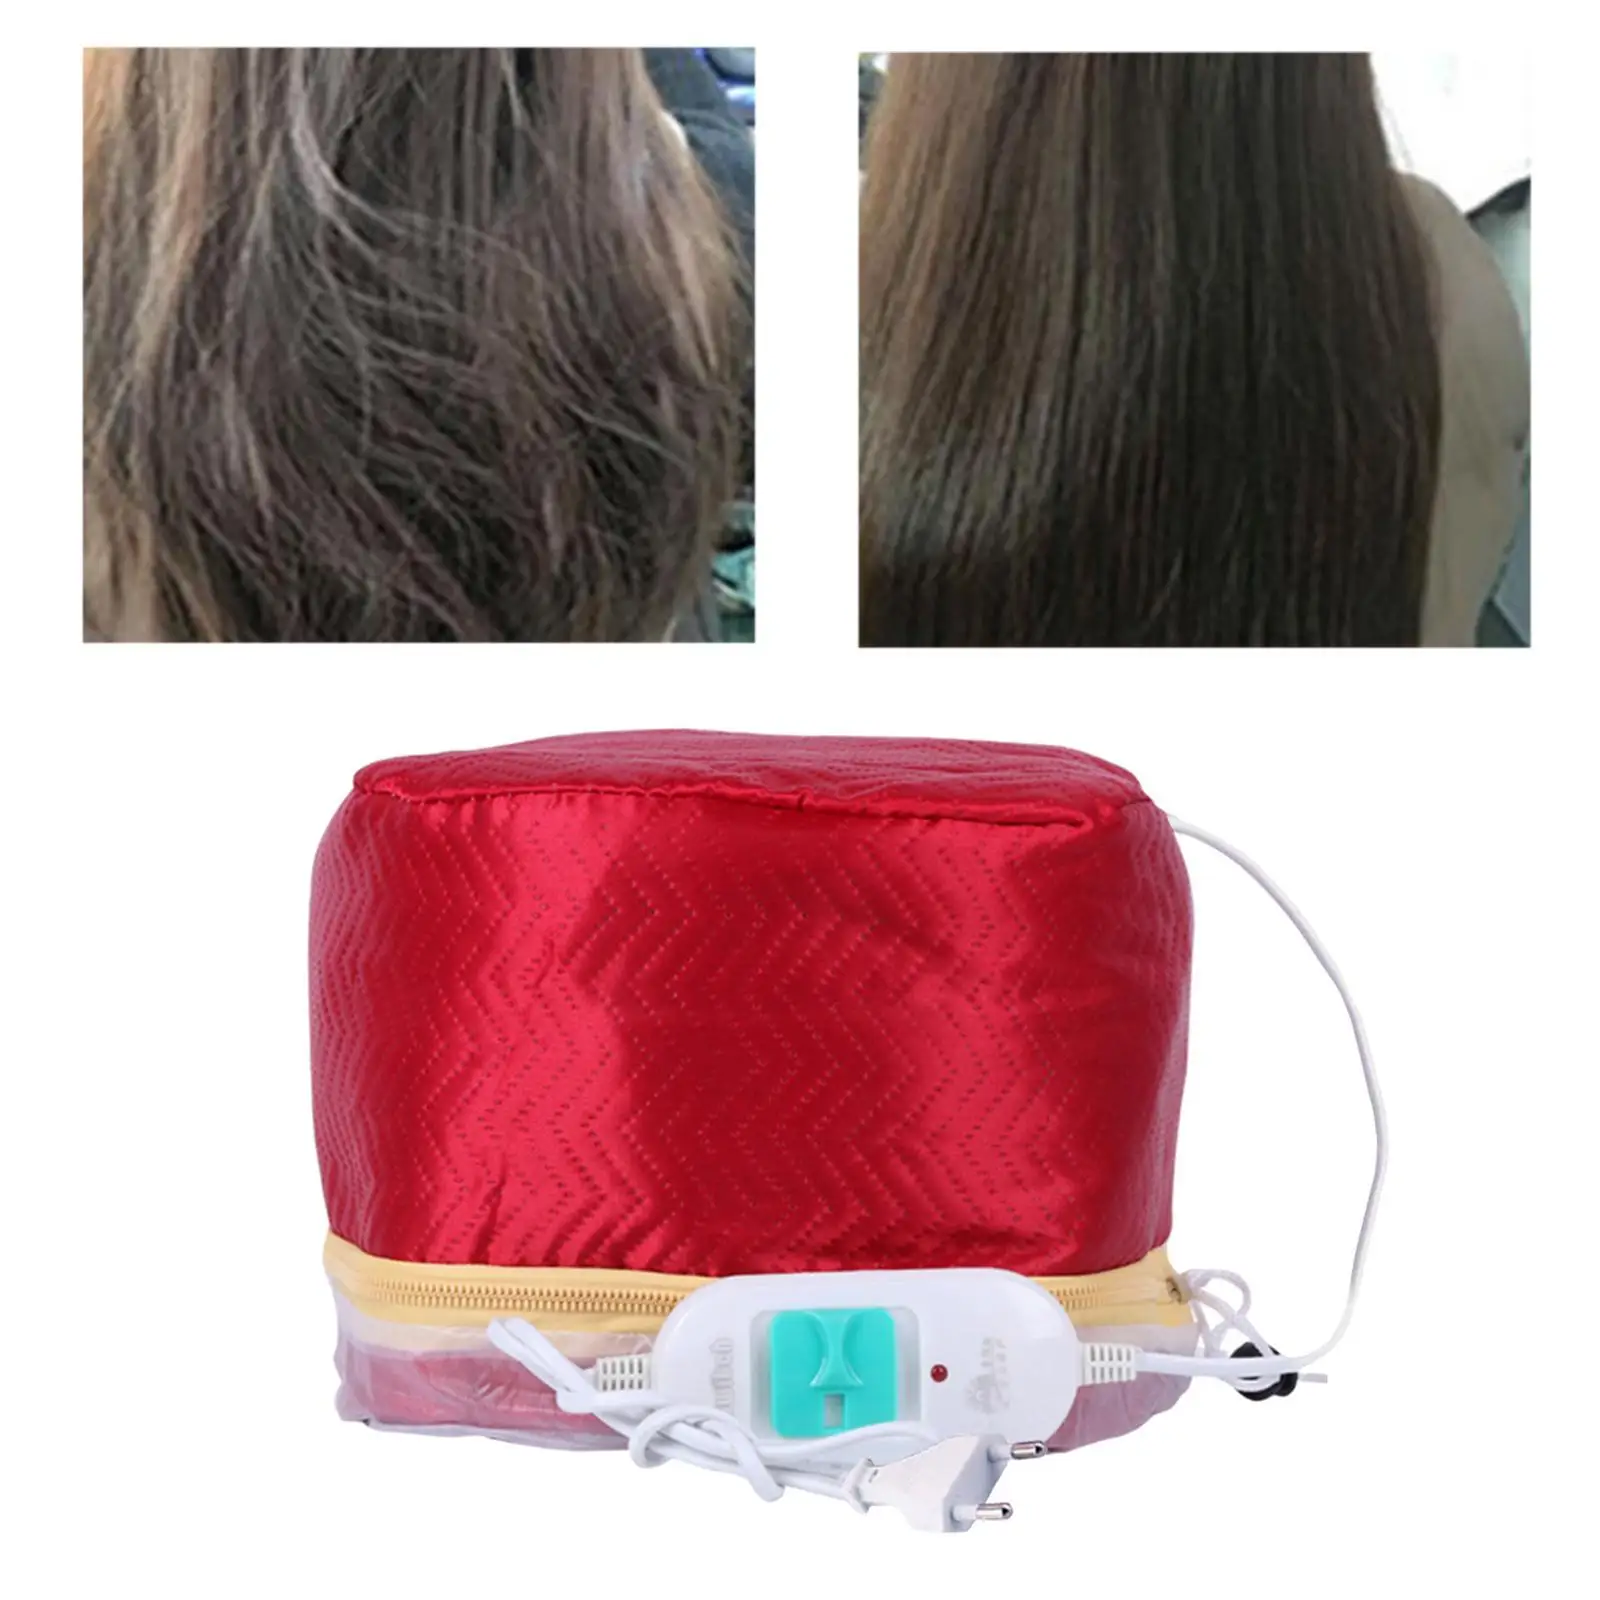 Adjustable Heating Hair Cap Steamer Nourishing Thermal Treatment Cap Nursing Hair Care Styling Spa Home Salon Tools